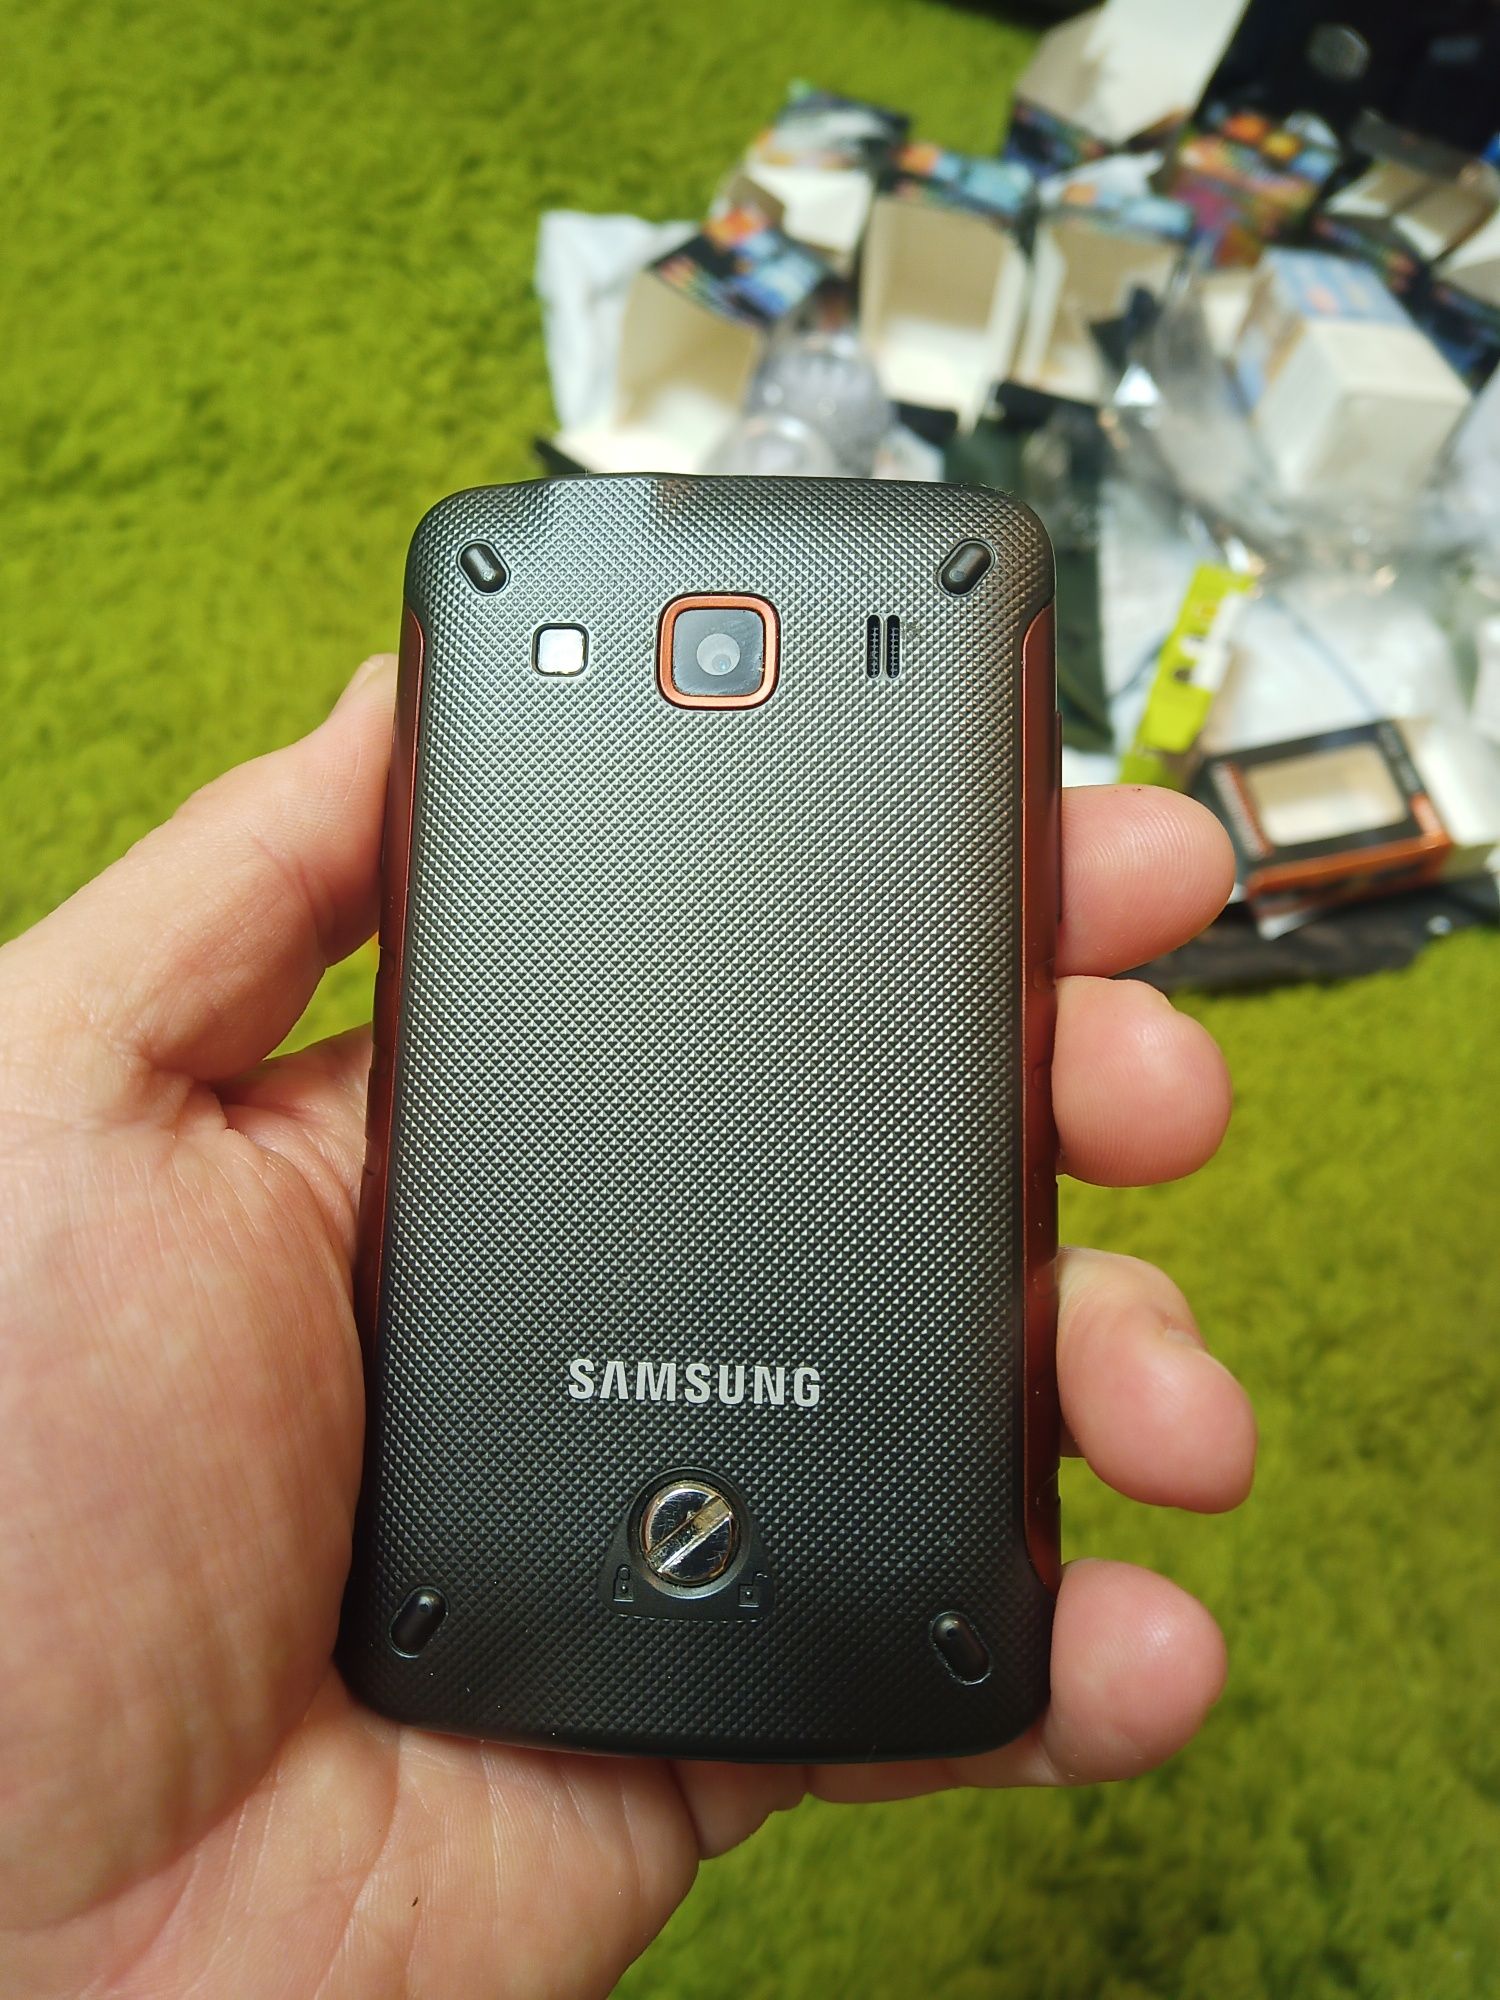 Захищений Телефон, смартфон Samsung Galaxy Xcover S5690